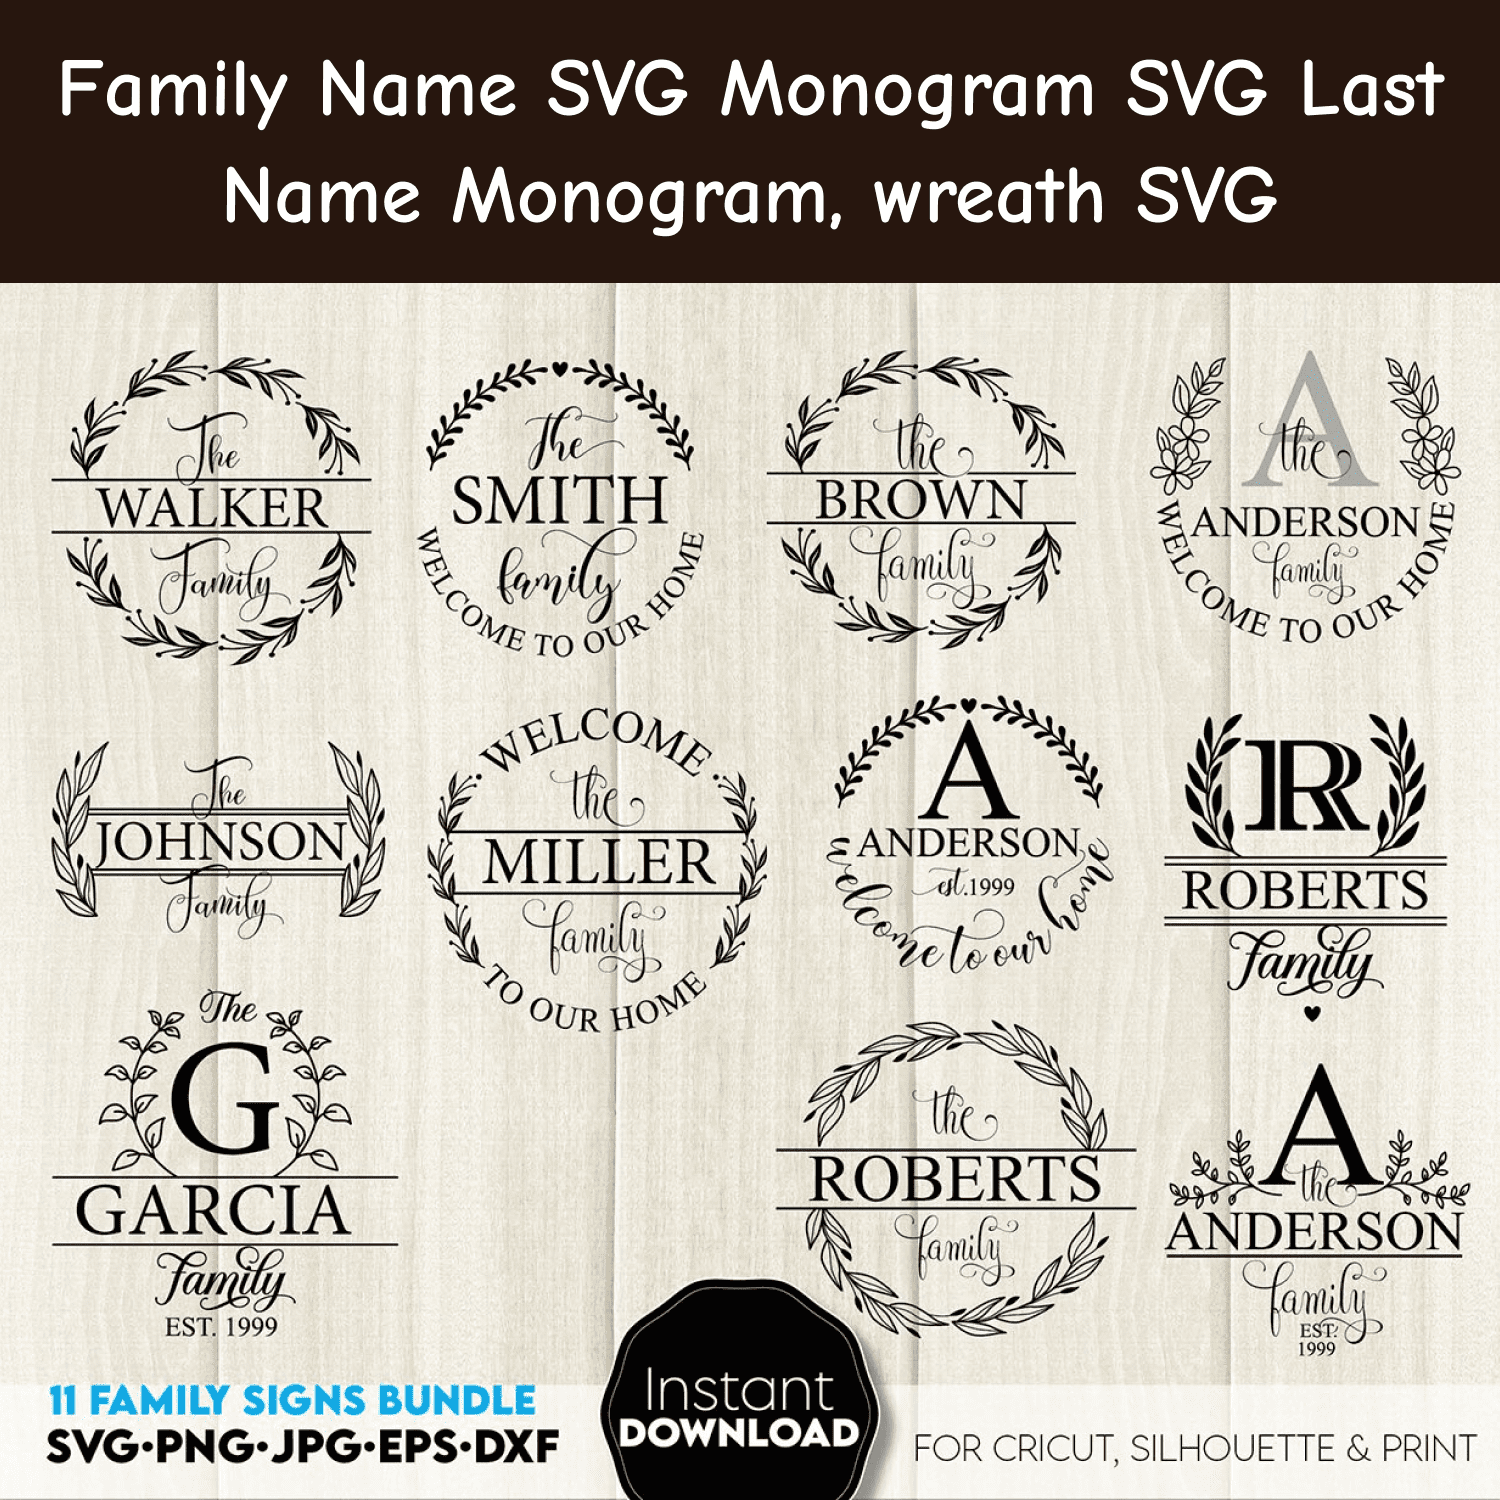 Family Name SVG Monogram SVG Last Name Monogram, Wreath SVG cover.